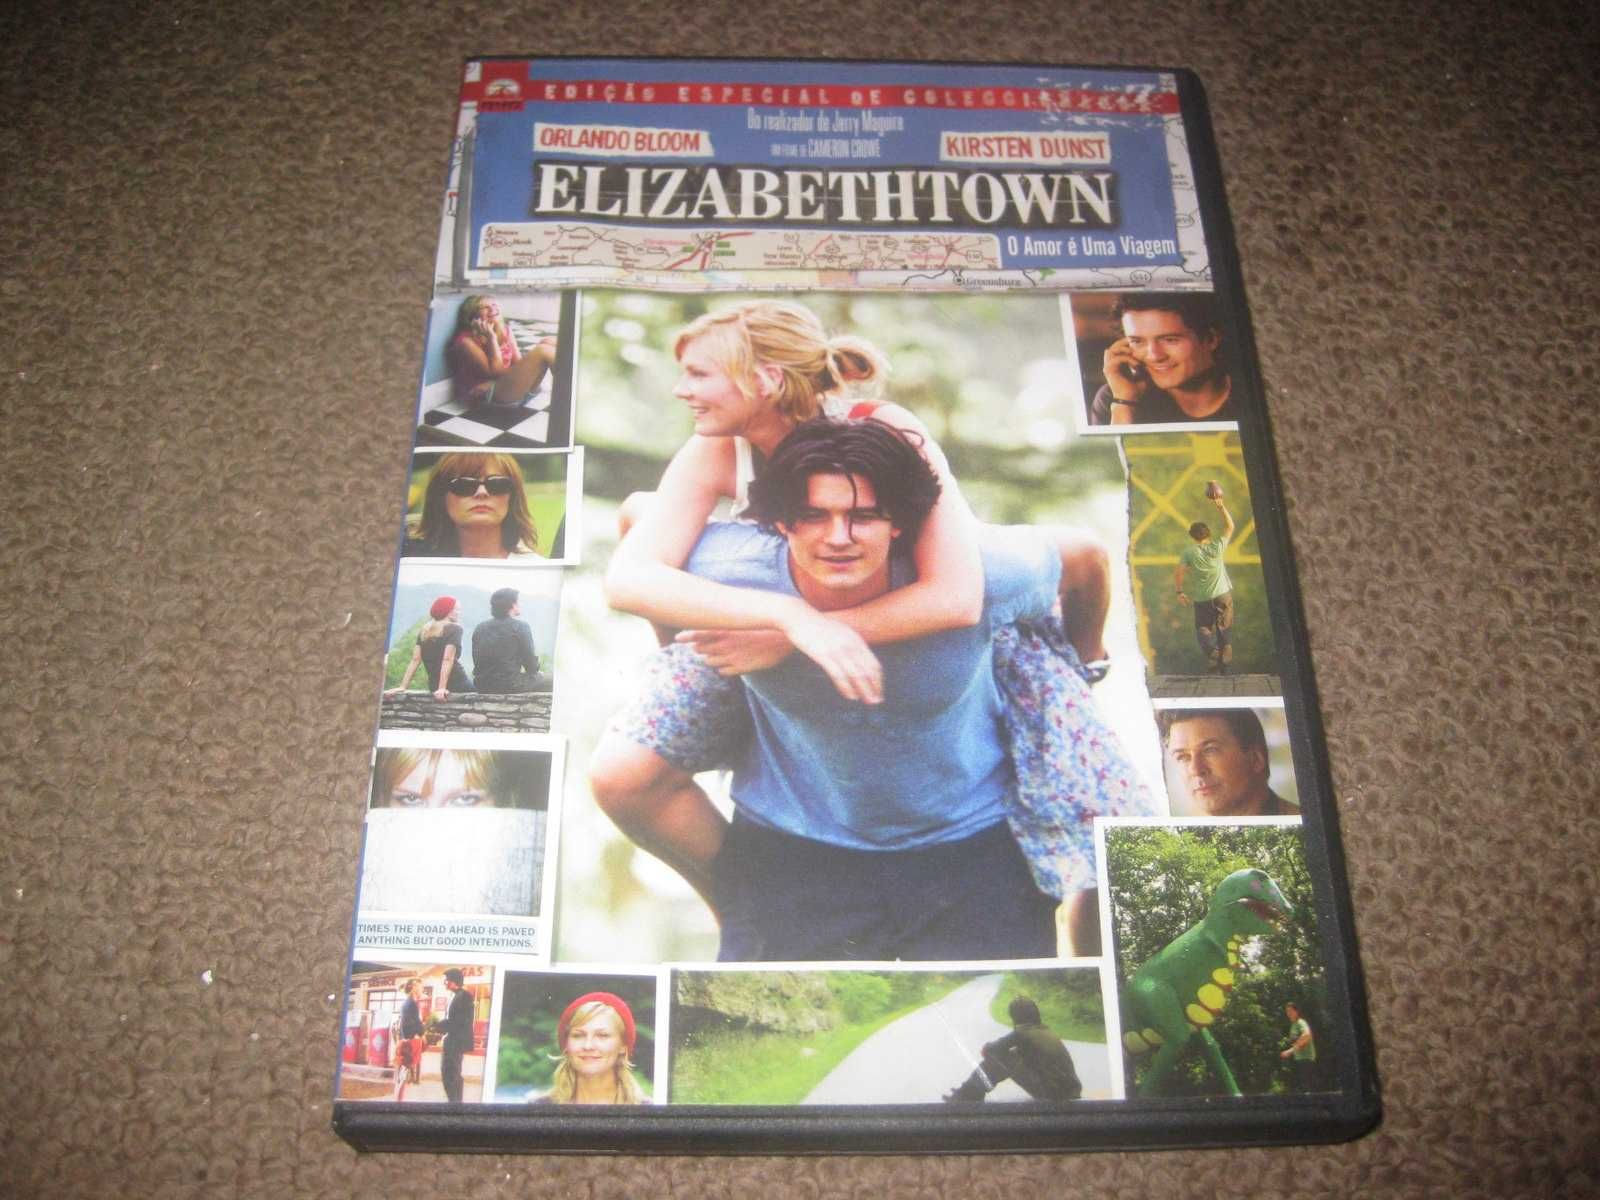 DVD "Elizabethtown" com Orlando Bloom